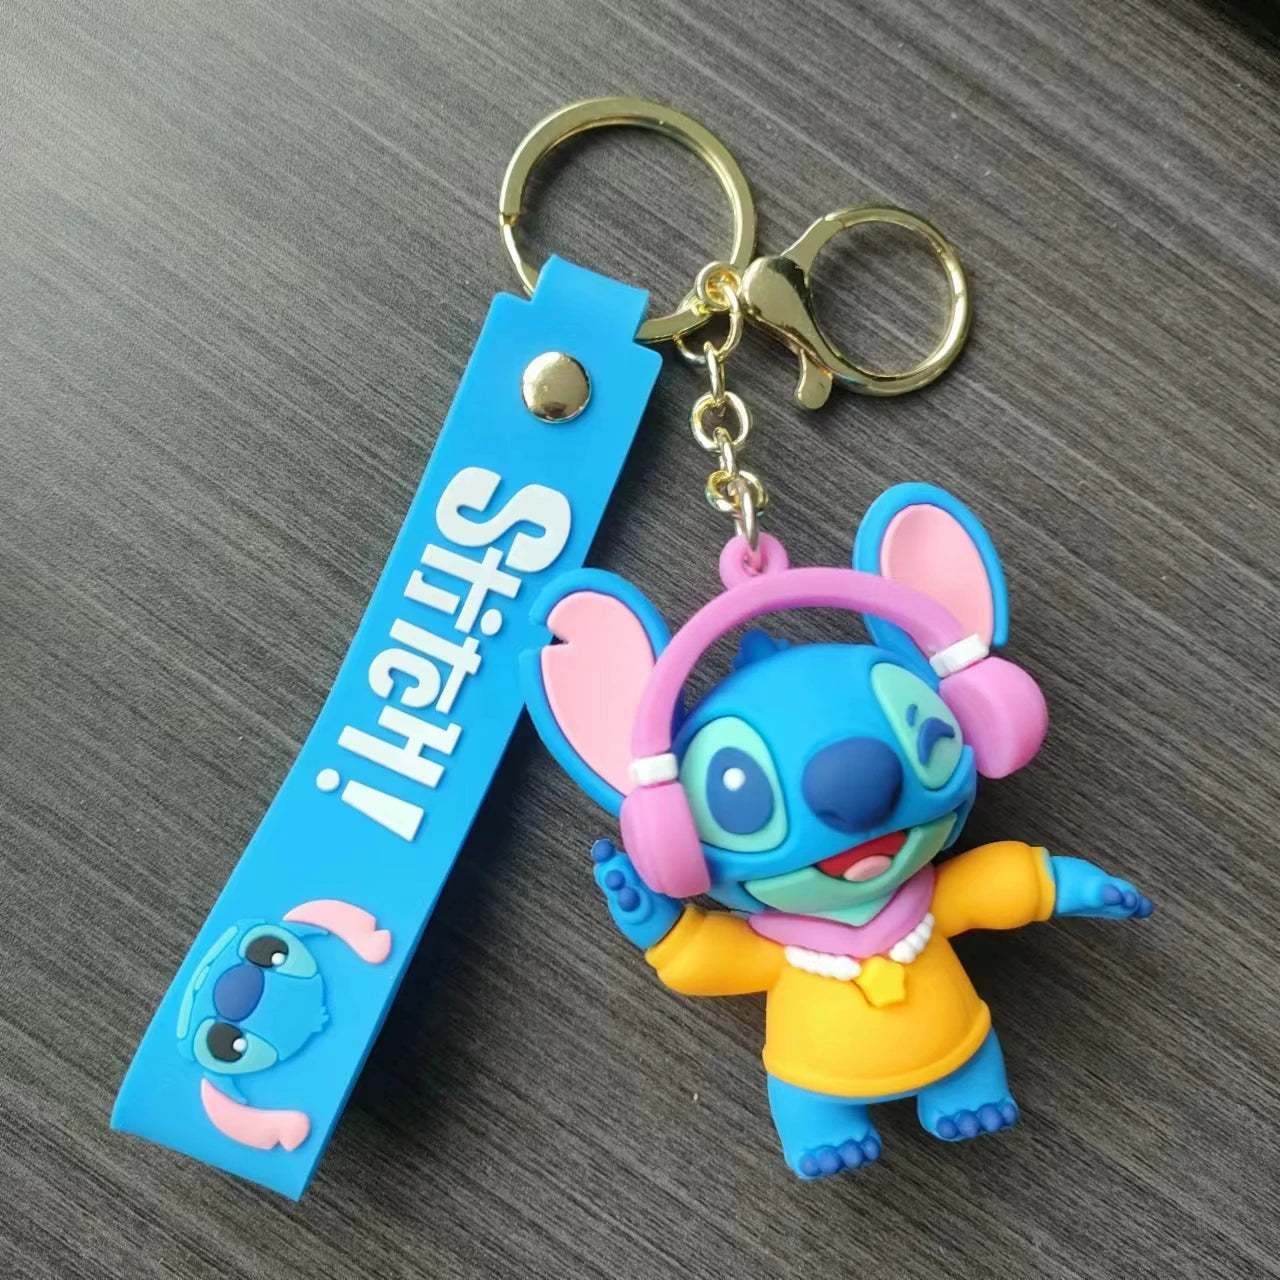 New Anime Disney Keychain Cartoon Mickey Mouse Minnie Lilo & Stitch Cute Doll Keyring Ornament Key Chain Pendant Kids Toys Gifts 24 - ihavepaws.com